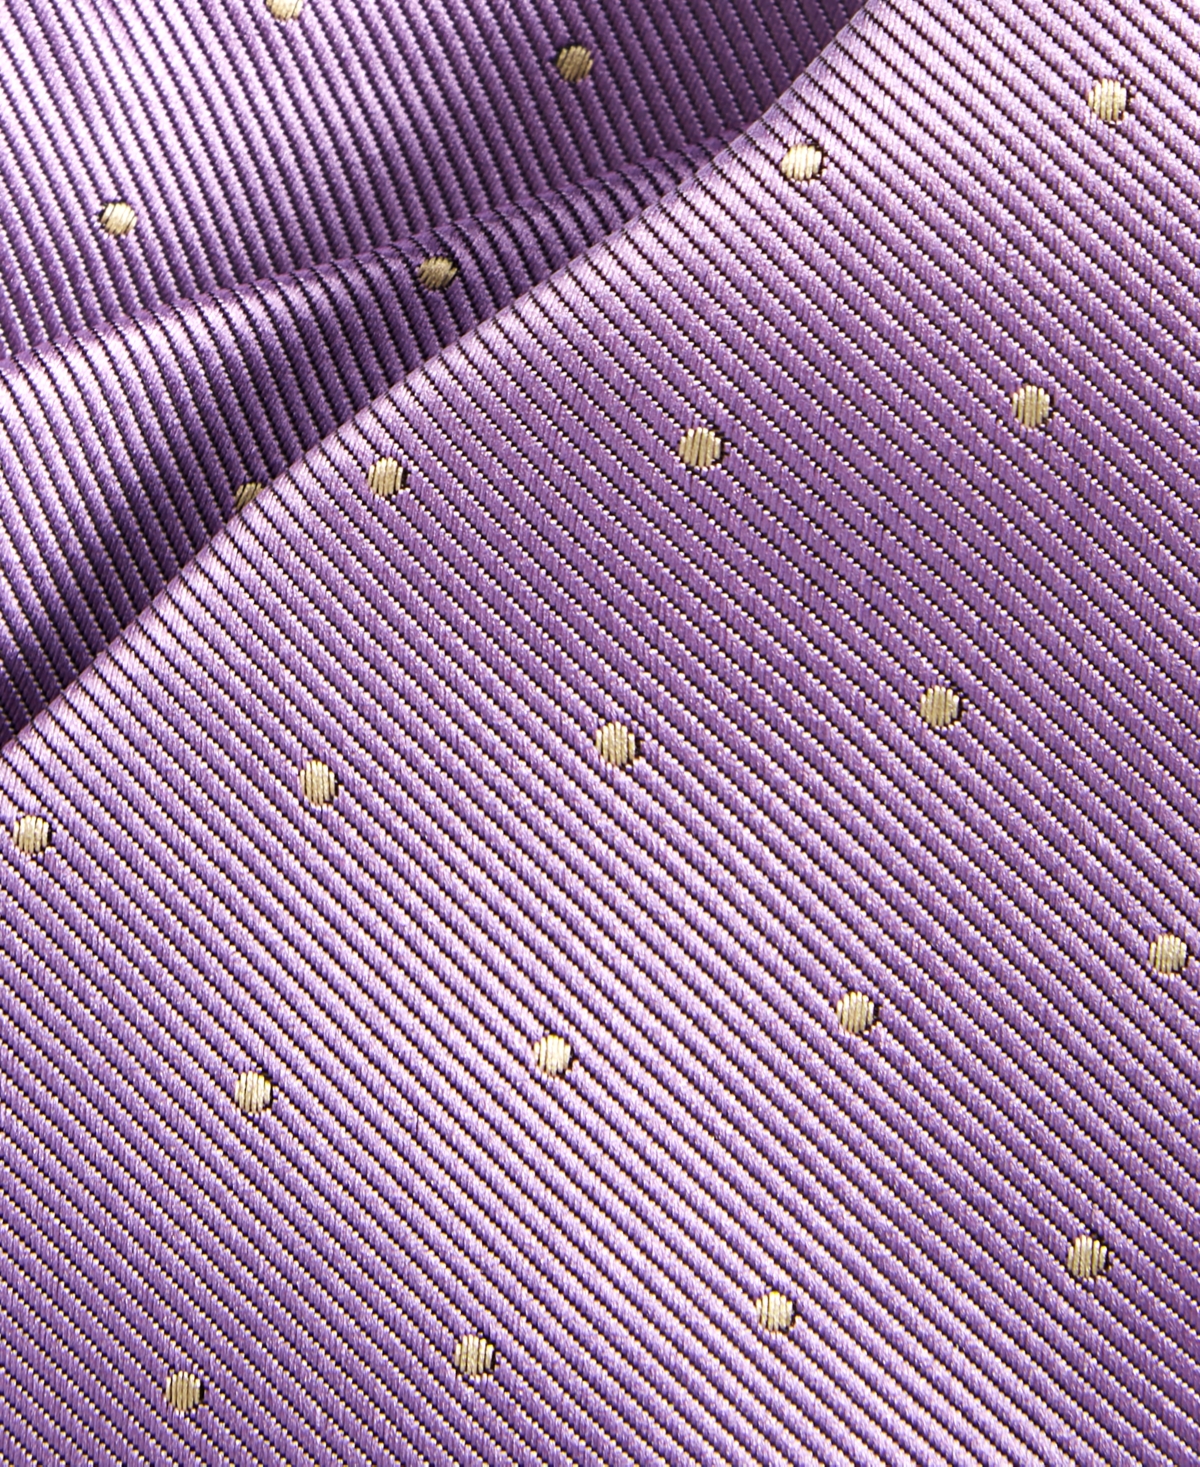 Shop Tayion Collection Men's Purple & Gold Dot Tie